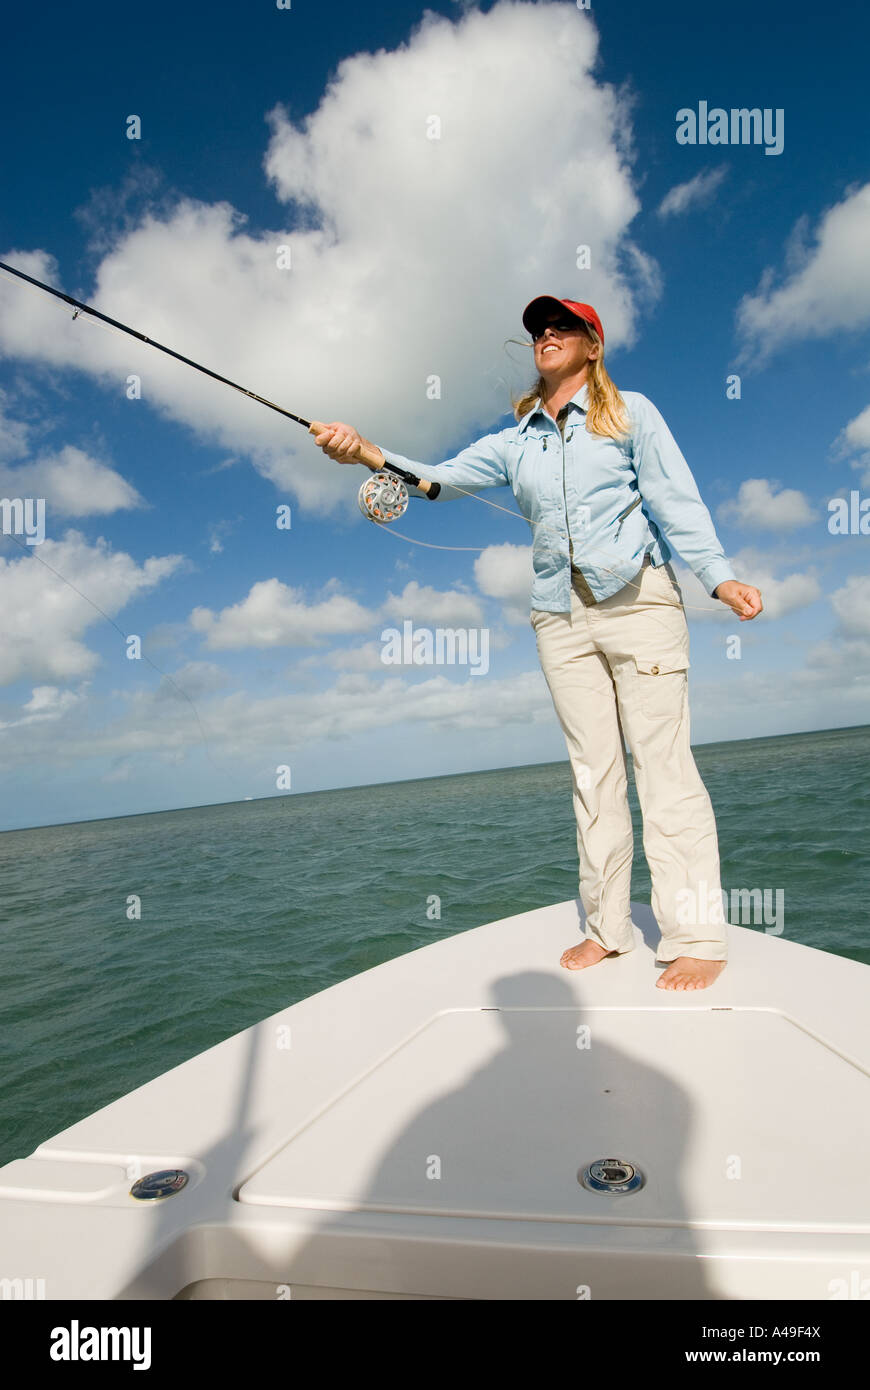 USA Florida Keys Woman fisherman wearing red hat fly fishing from